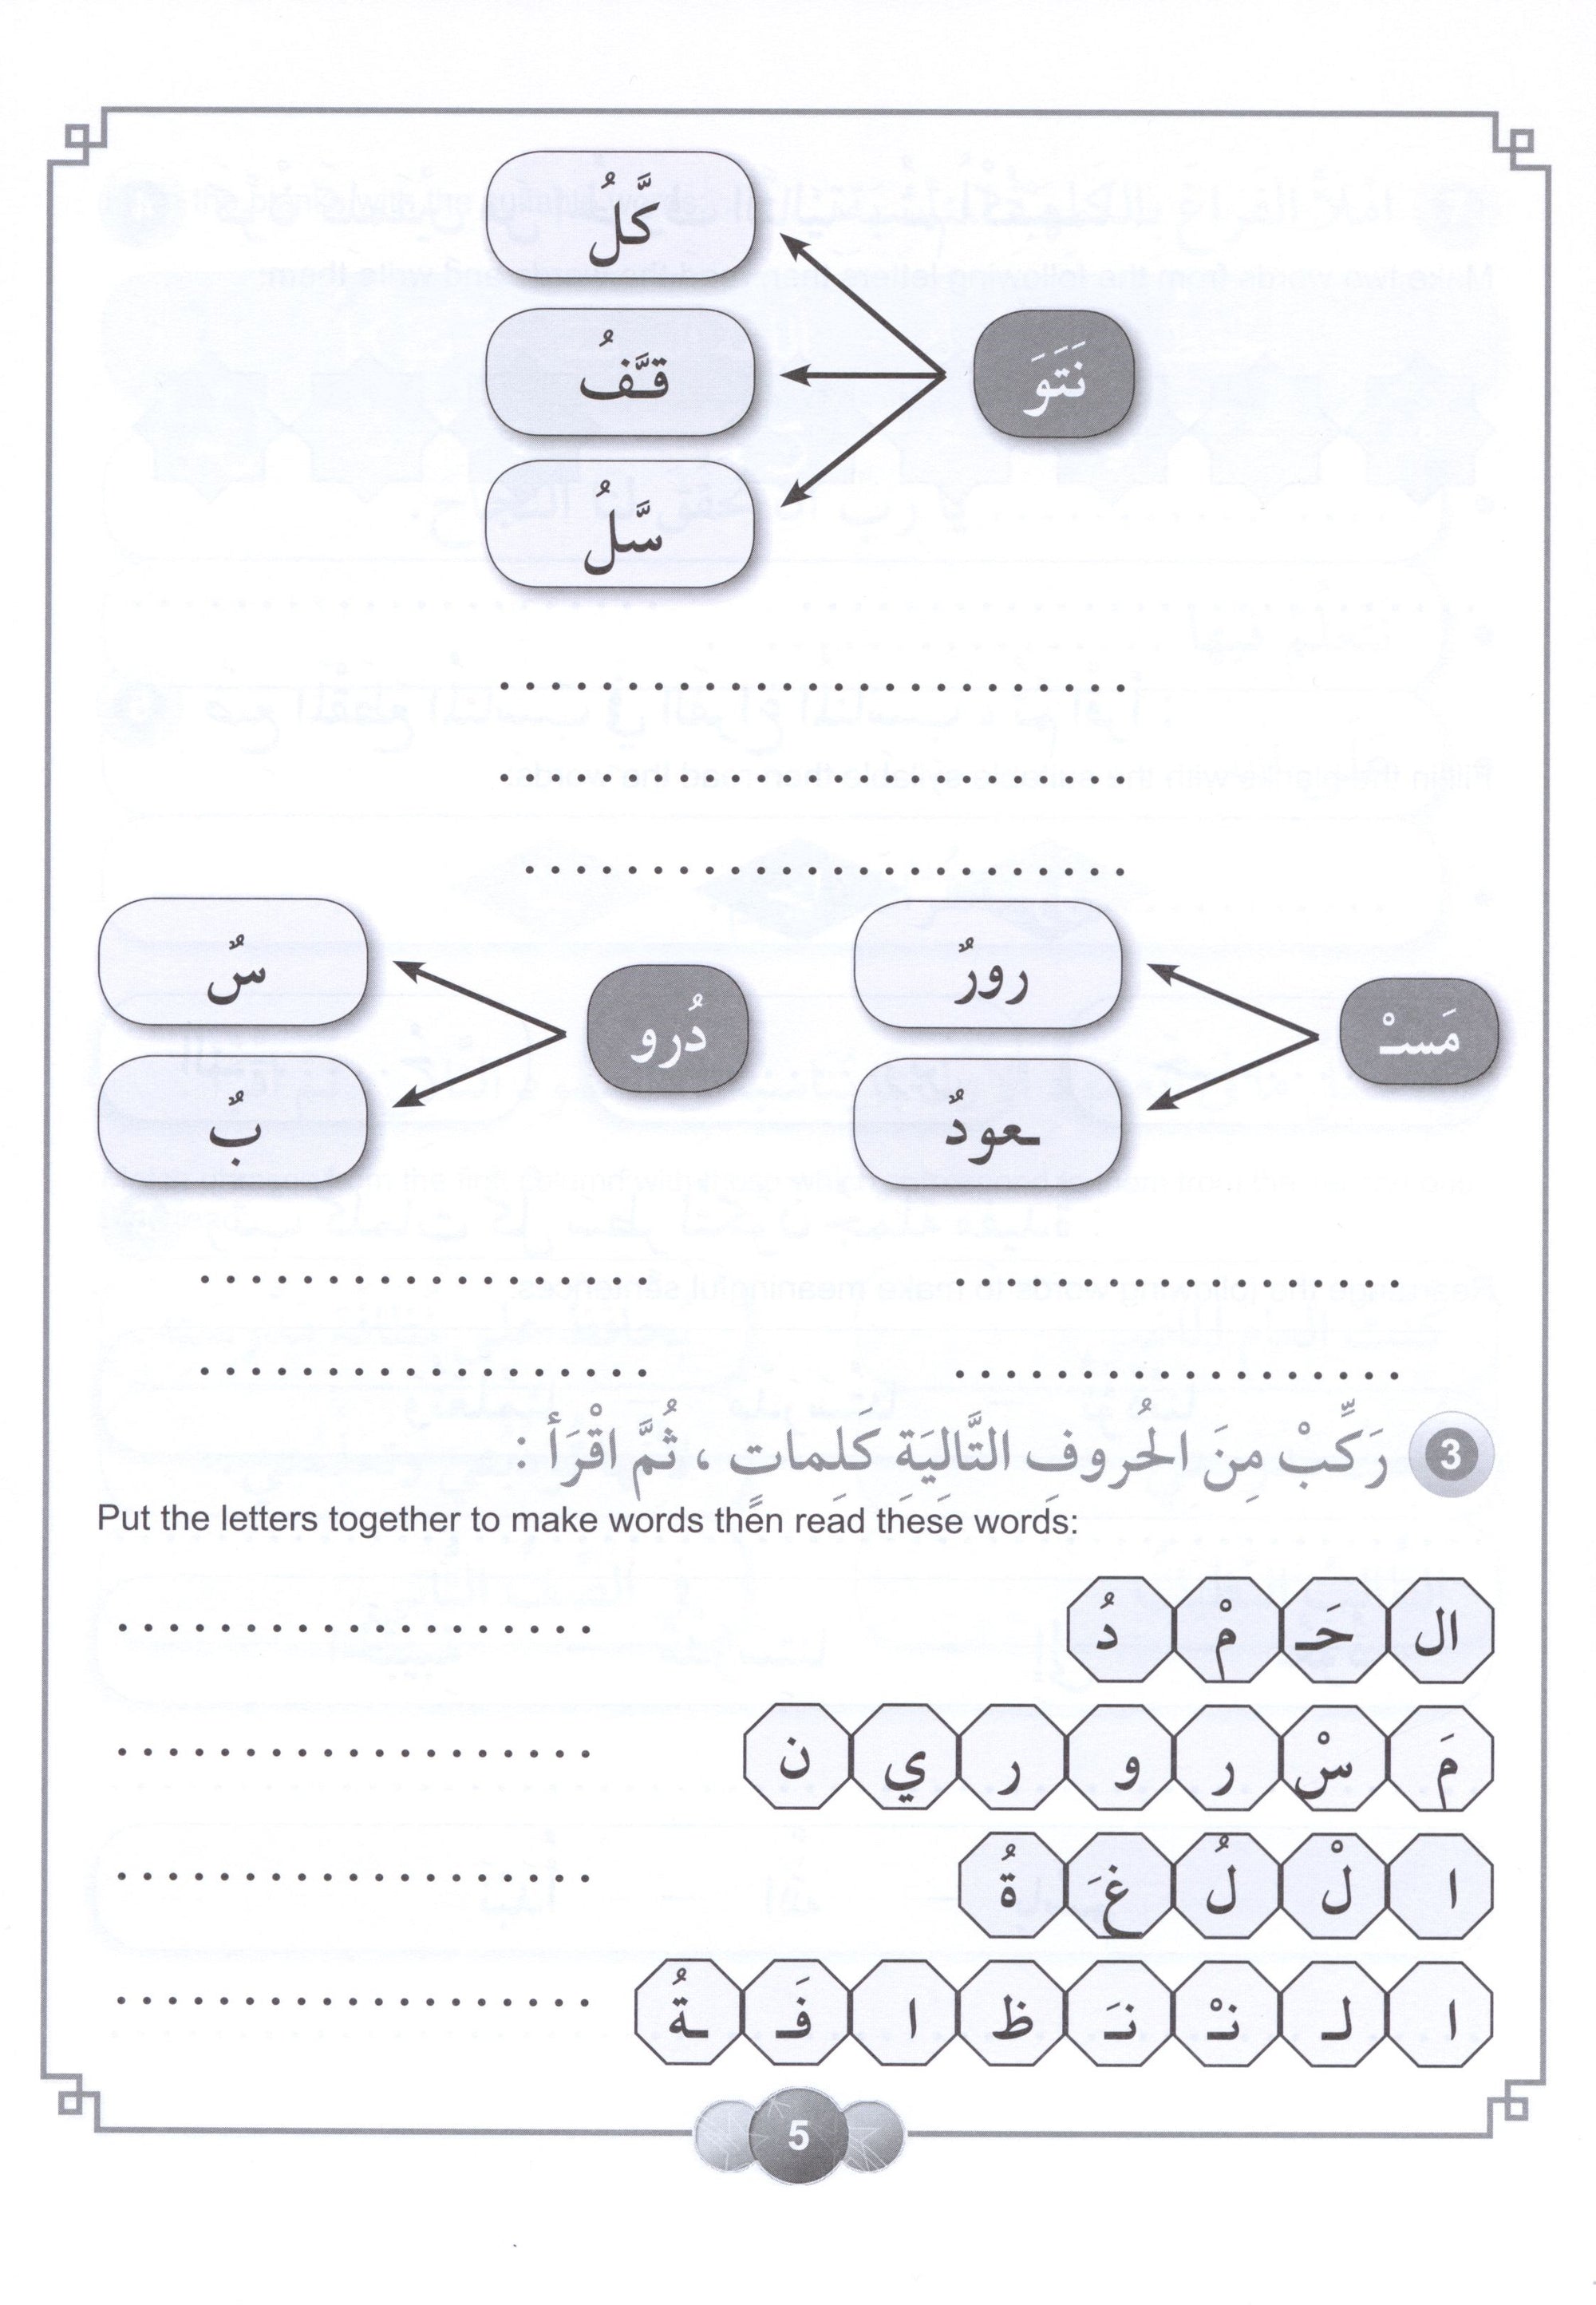 Horizons in the Arabic Language Workbook Level 3 الآفاق في اللغة العربية كتاب التدريبات